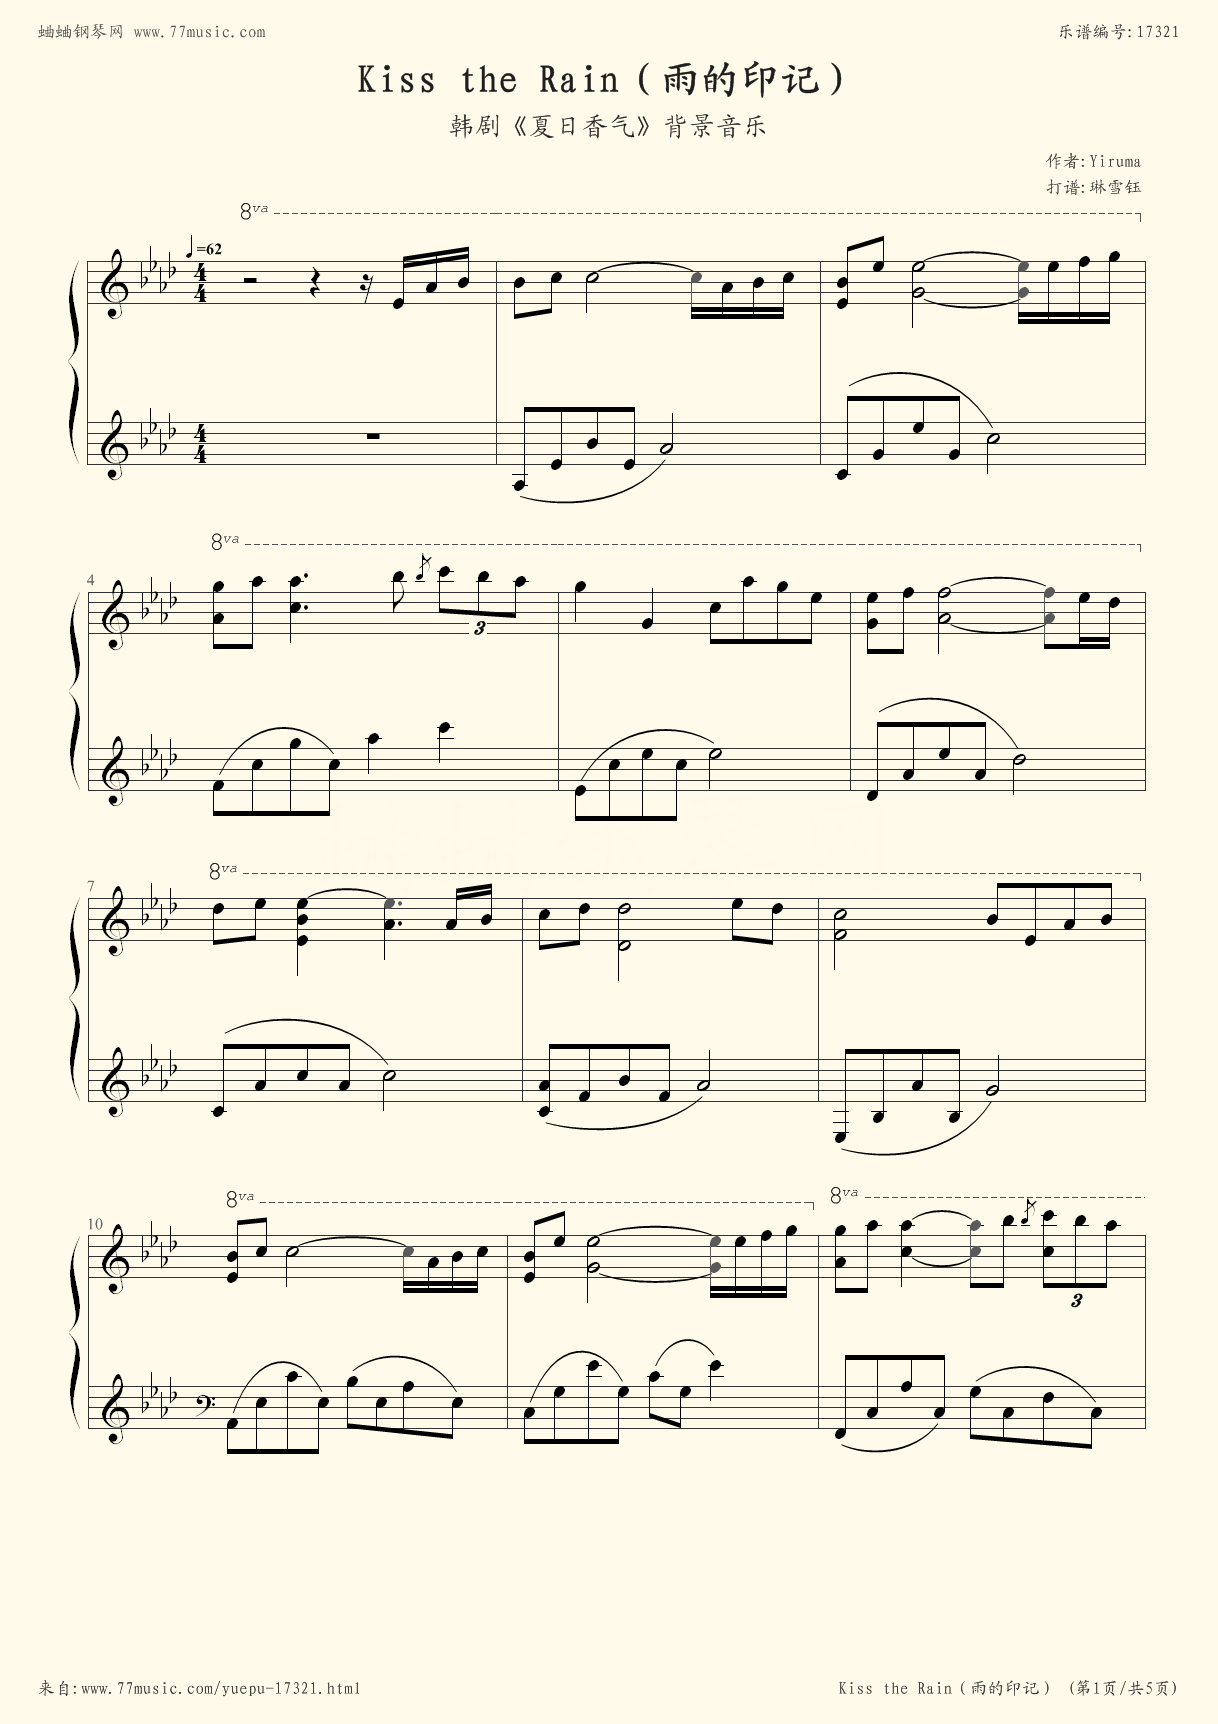 Kiss the Rain - Yiruma - Flash Version2 Free Piano Sheet ...